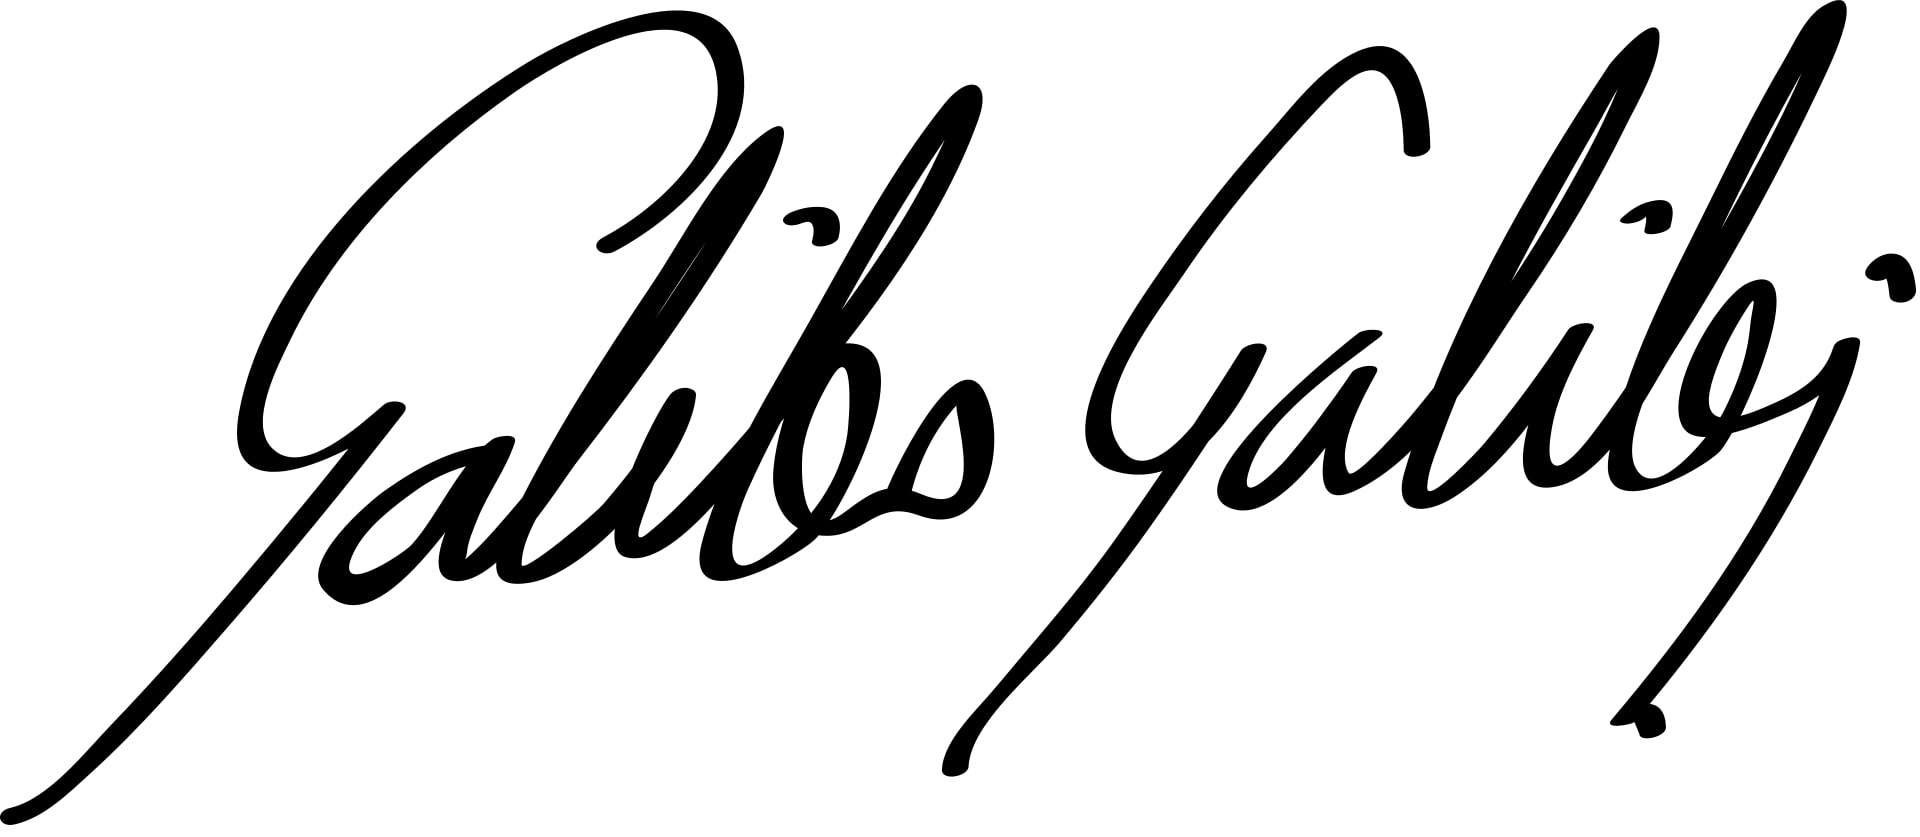 Galileo Galilei Signature